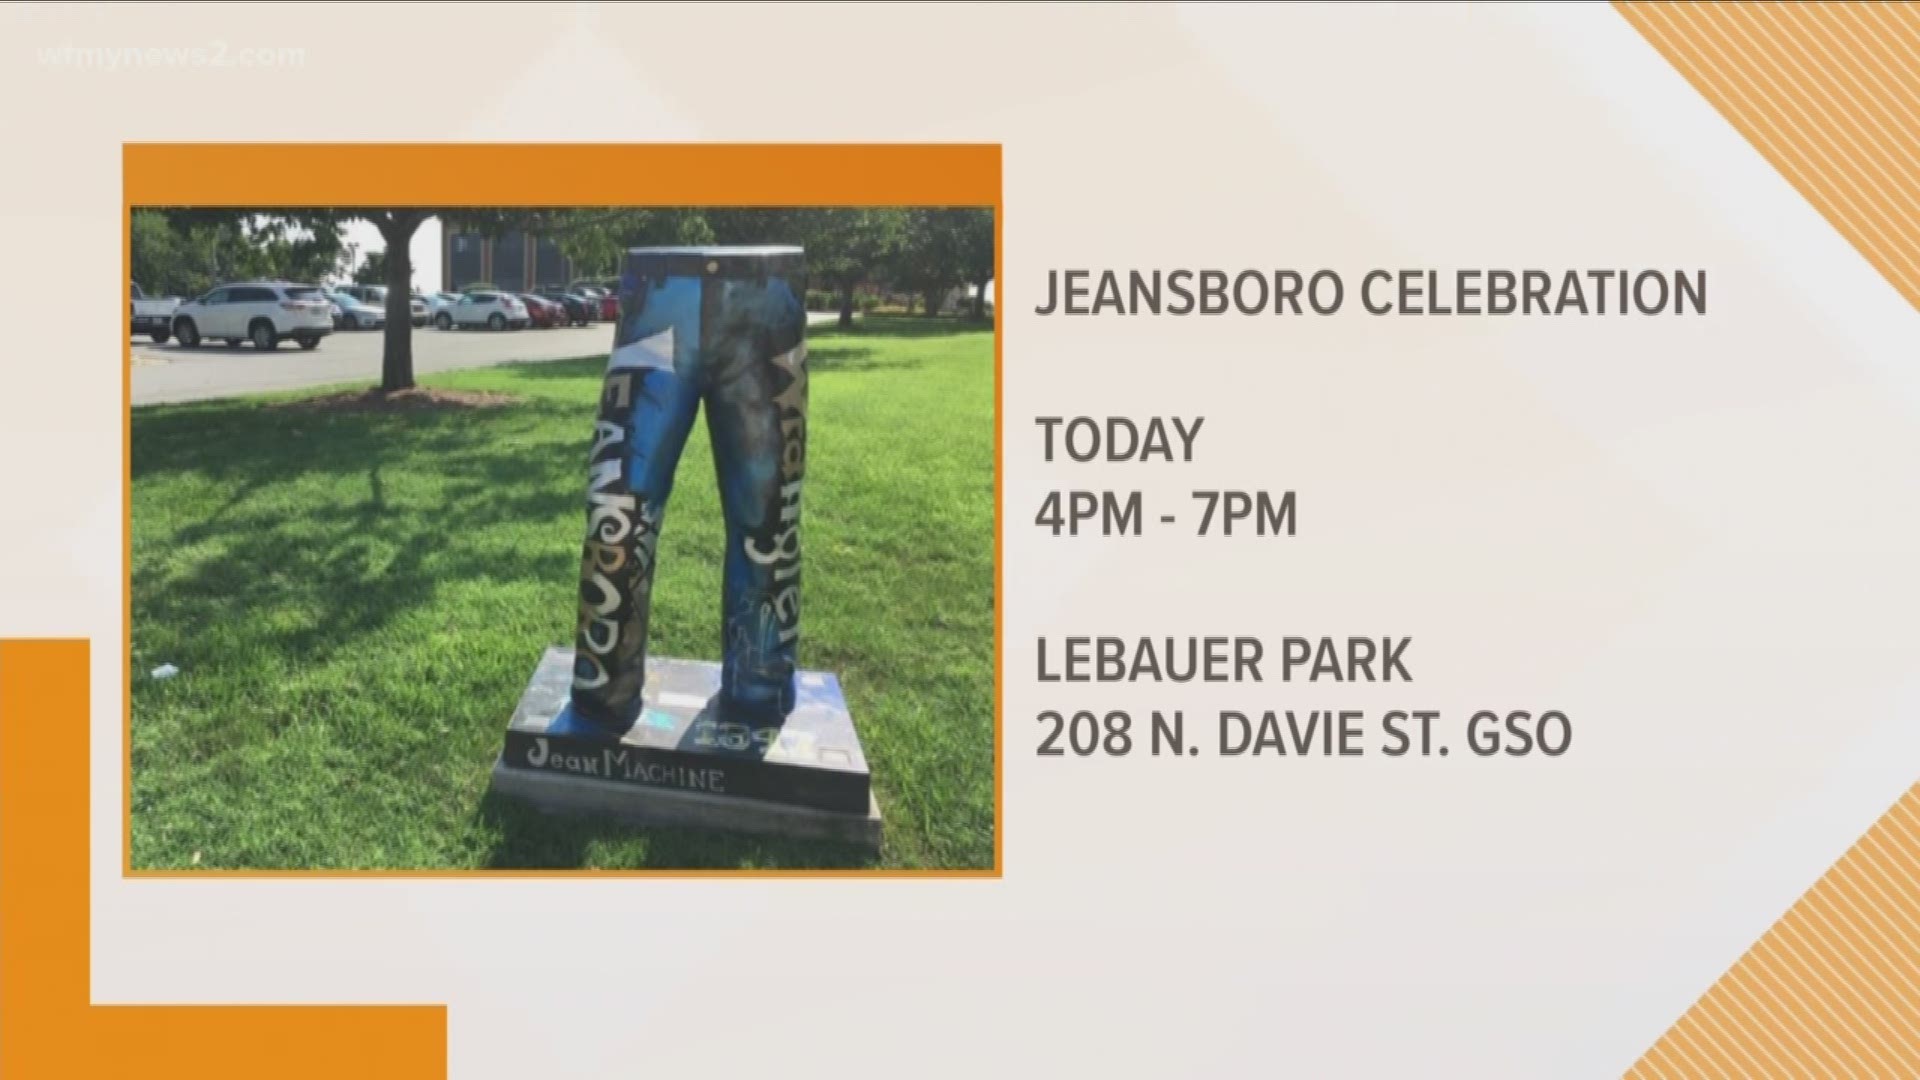 Greensboro Mayor Nancy Vaughn will proclaim June 19, 2019 as "Jeansboro Day."